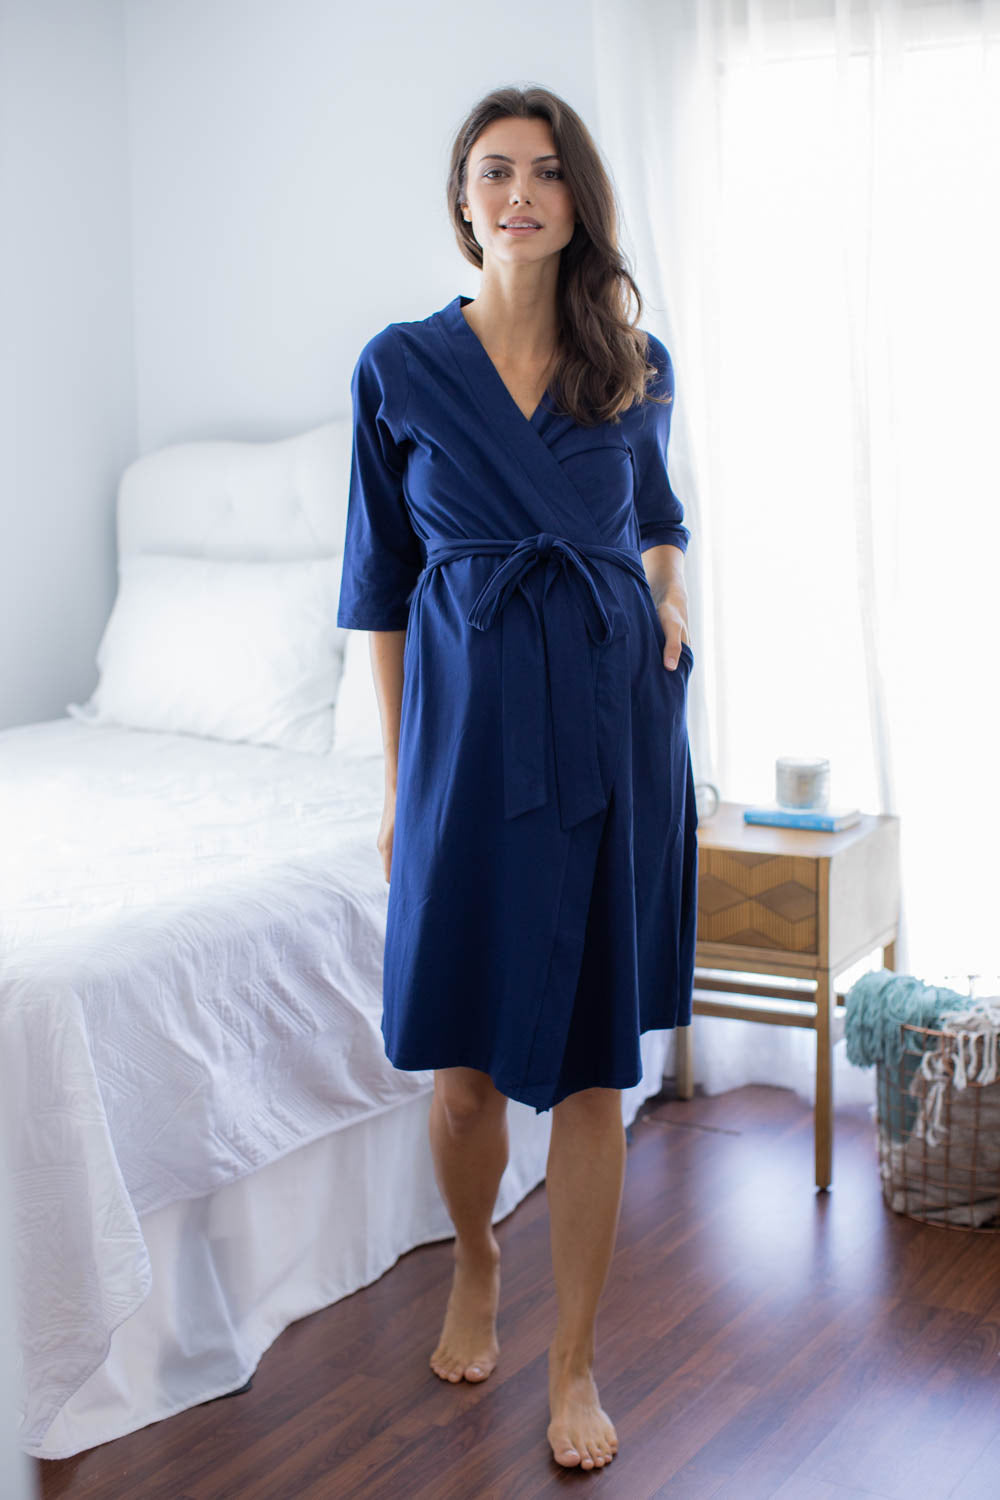 Navy Pregnancy/Postpartum Robe & Blue Gingham Swaddle Blanket Set